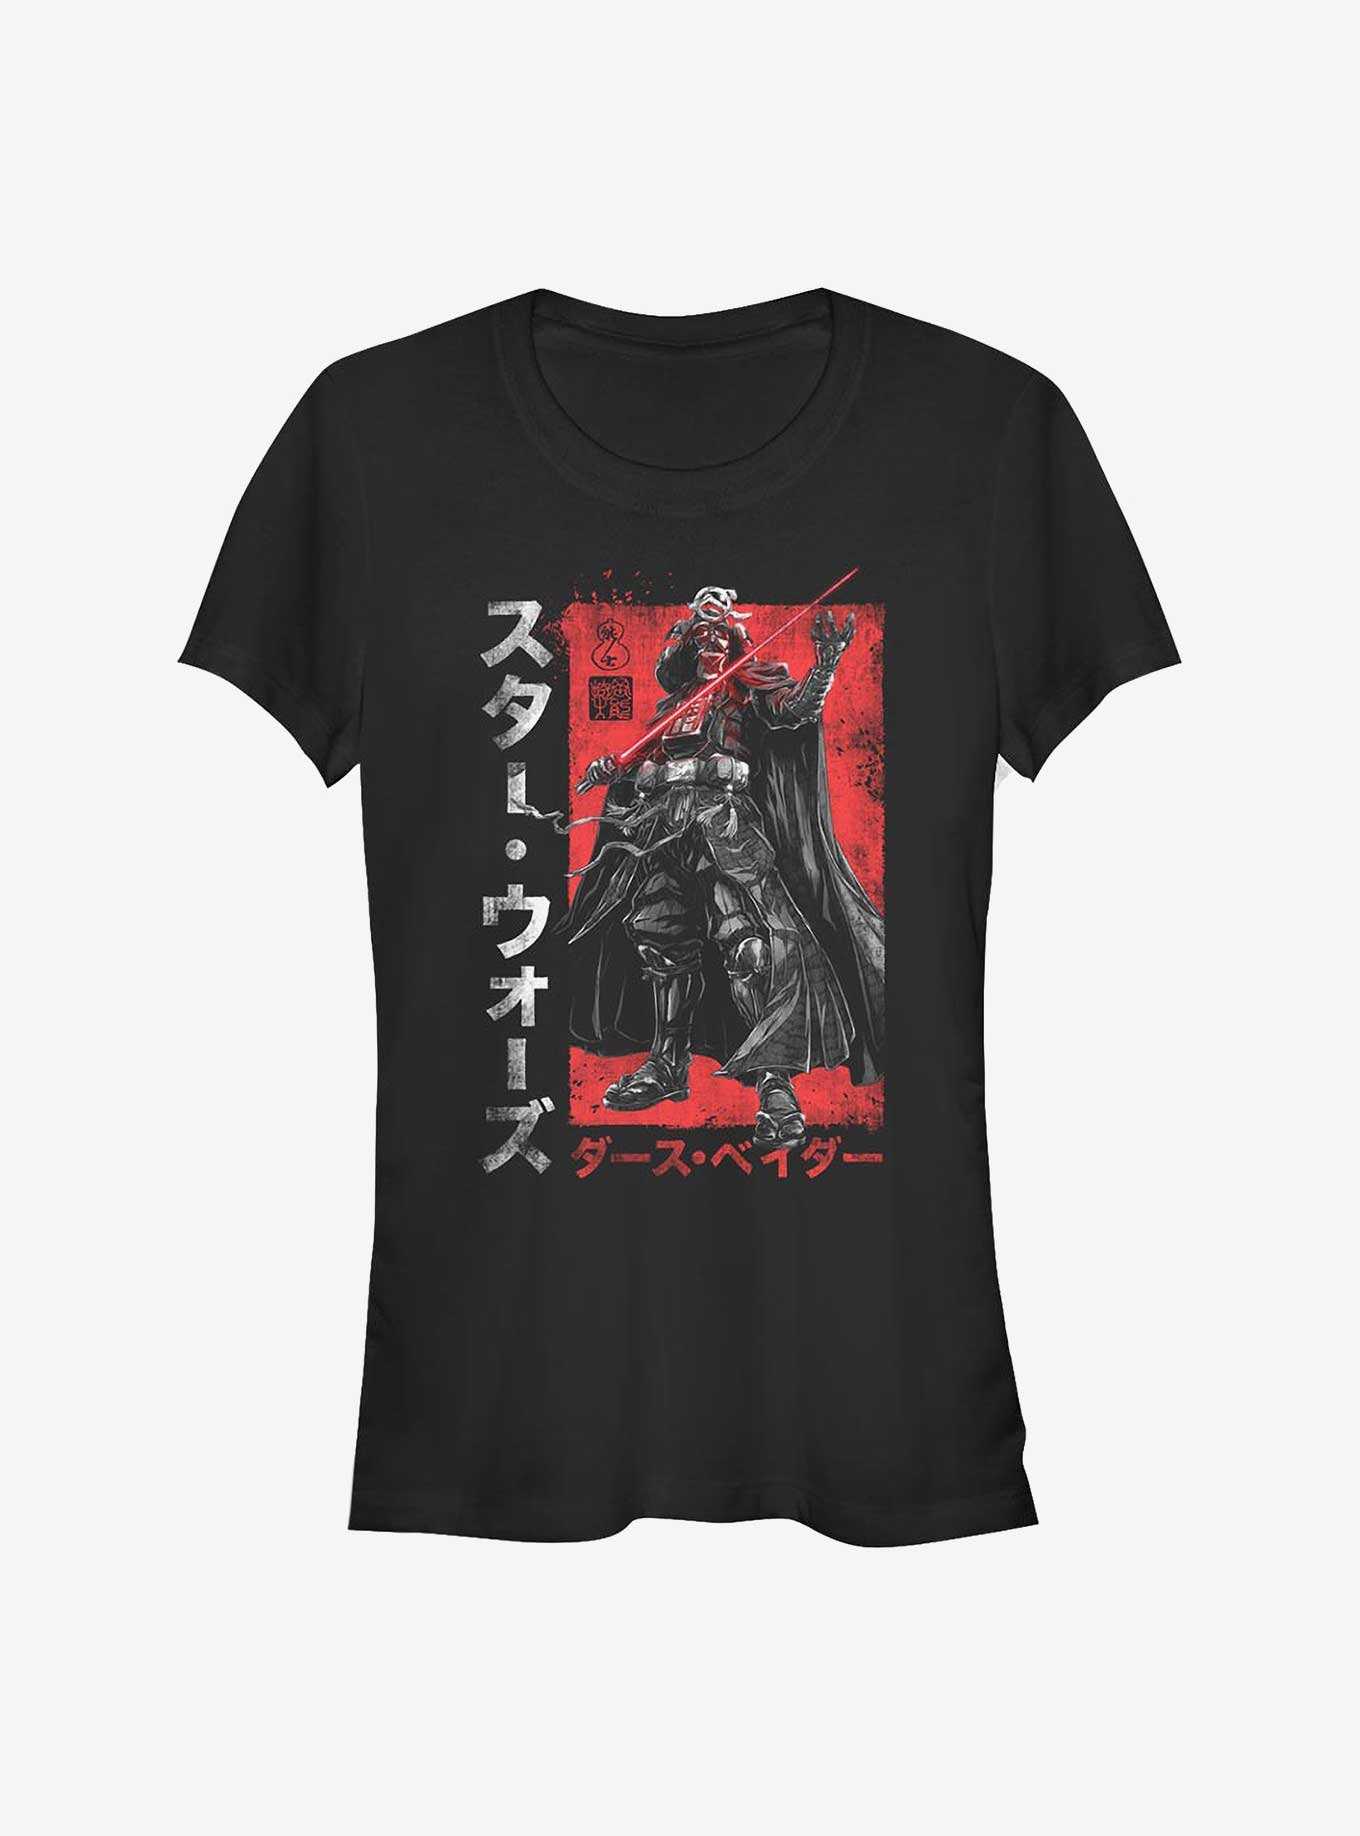 Star Wars: Visions Darth Vader Samurai Girls T-Shirt, , hi-res